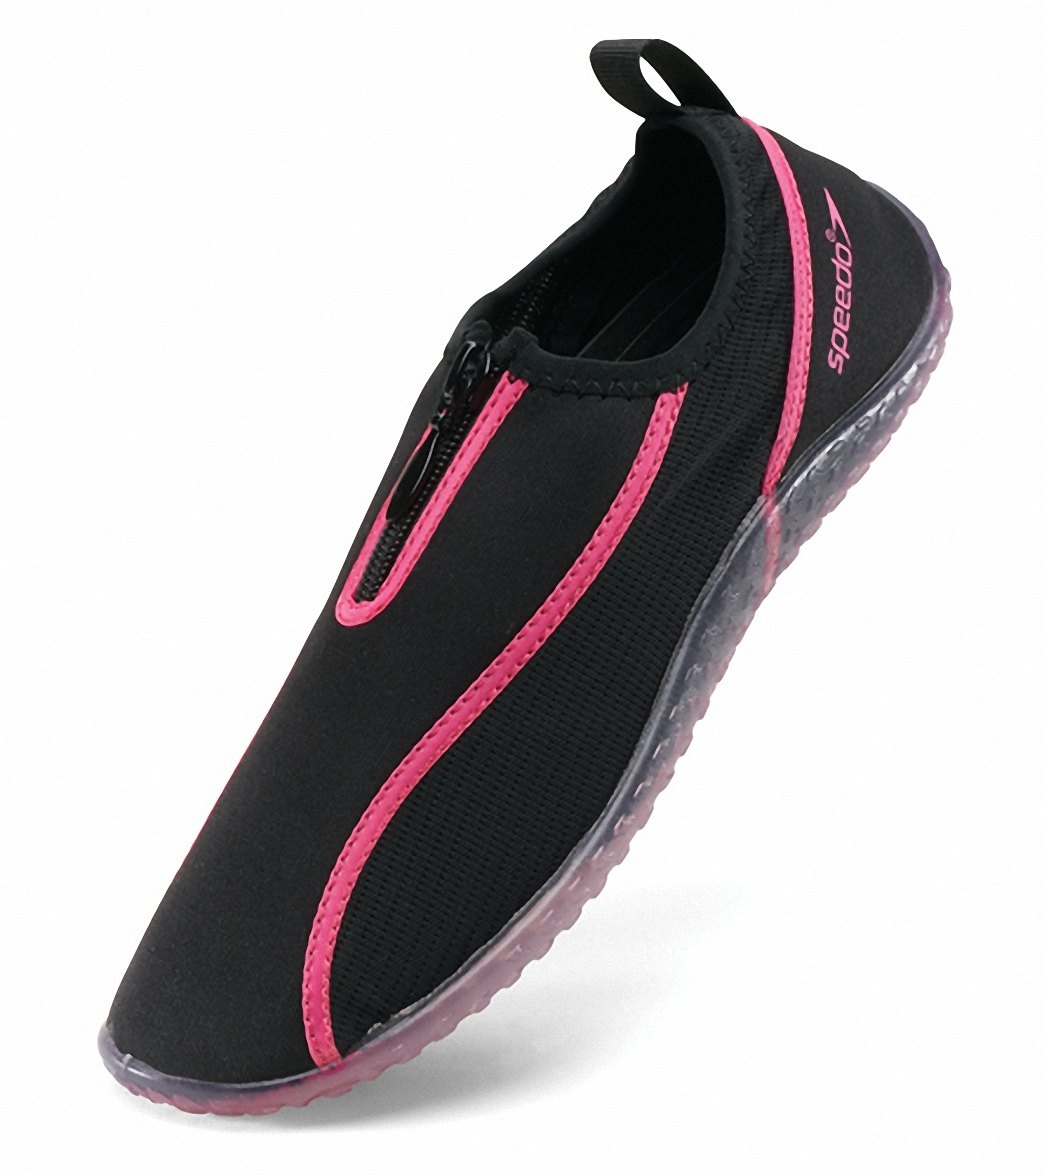 Speedo Women's Amphibious Zipwalker Water Shoes at SwimOutlet.com